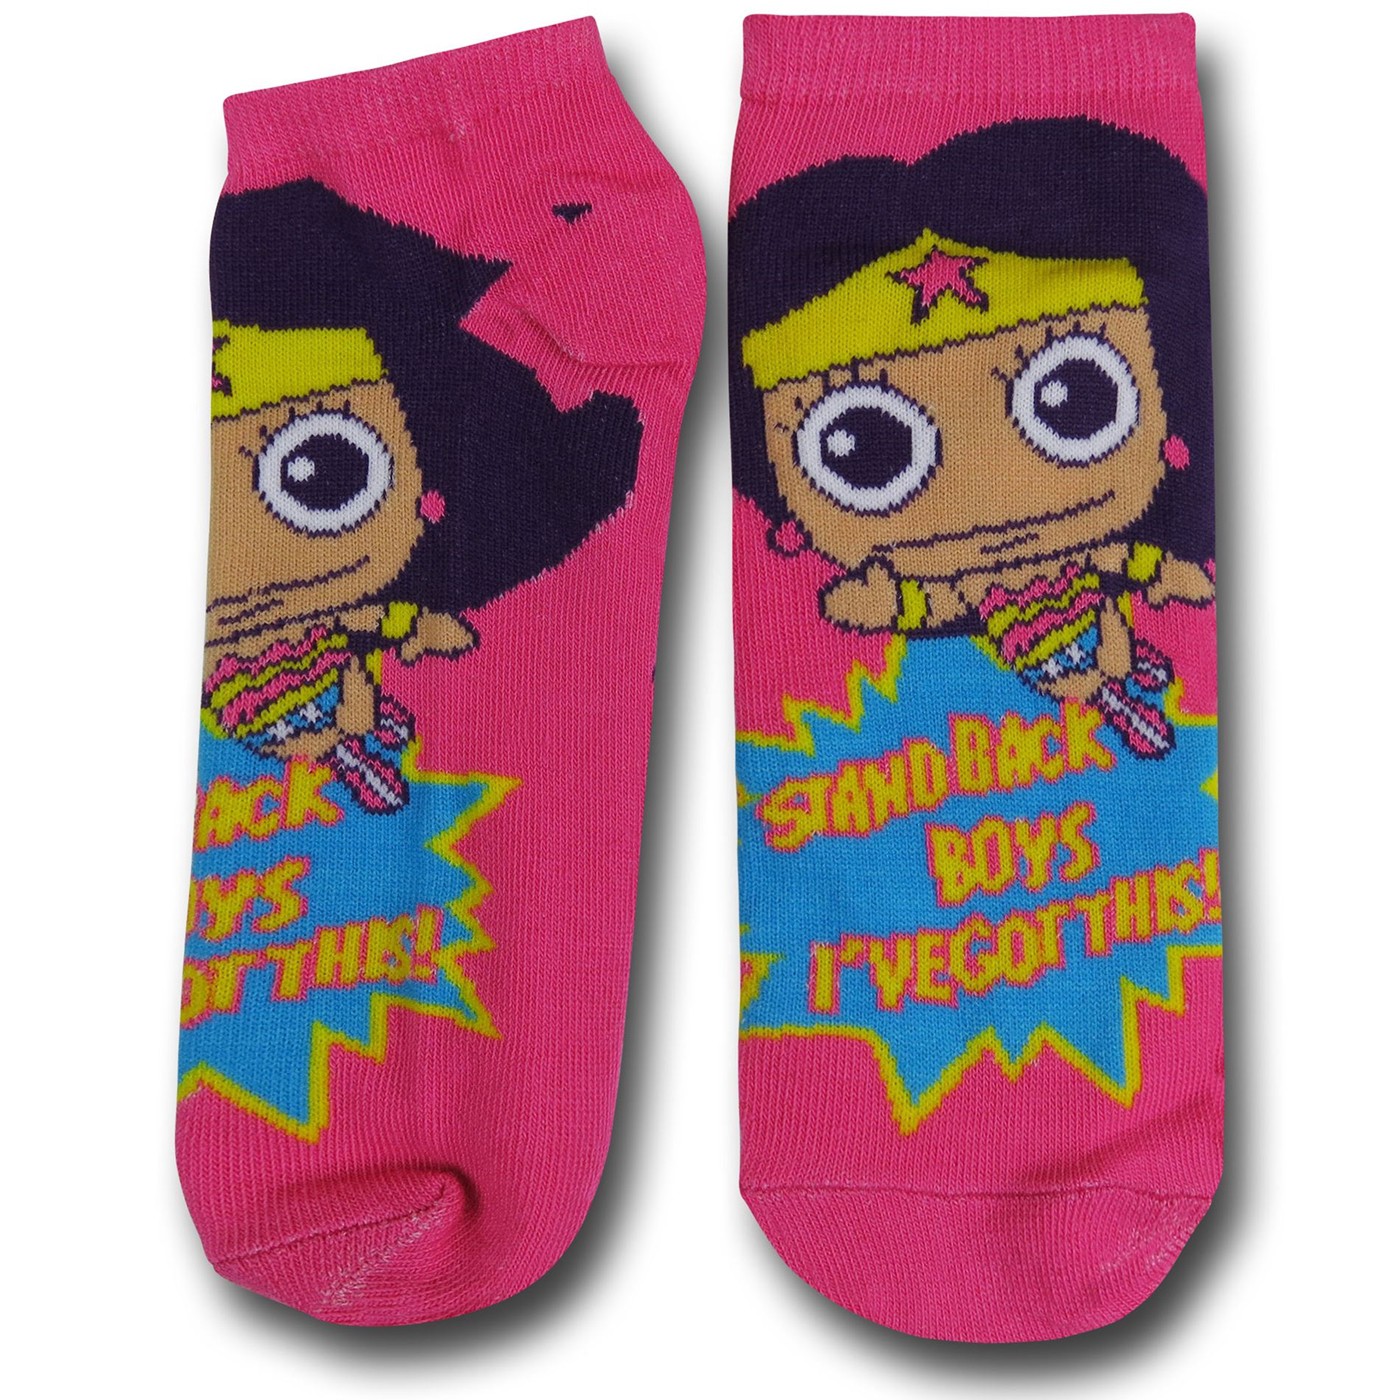 DC Cuties Women's Socks 5-Pack